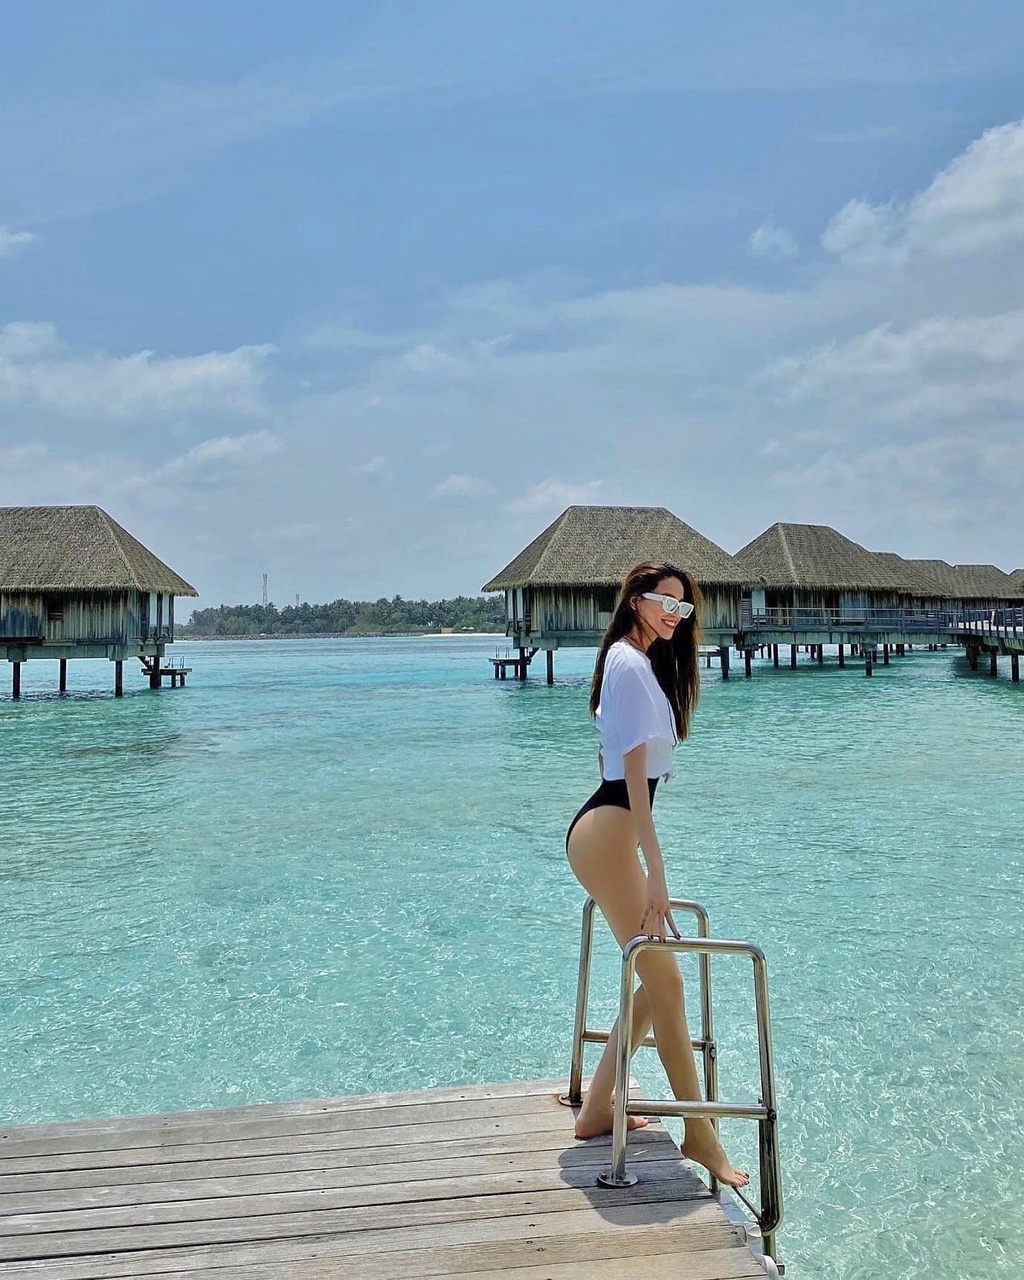 Nhung khu resort sang chanh bac nhat Maldives duoc sao Viet lua chon hinh anh 2 IMG_4528.JPG